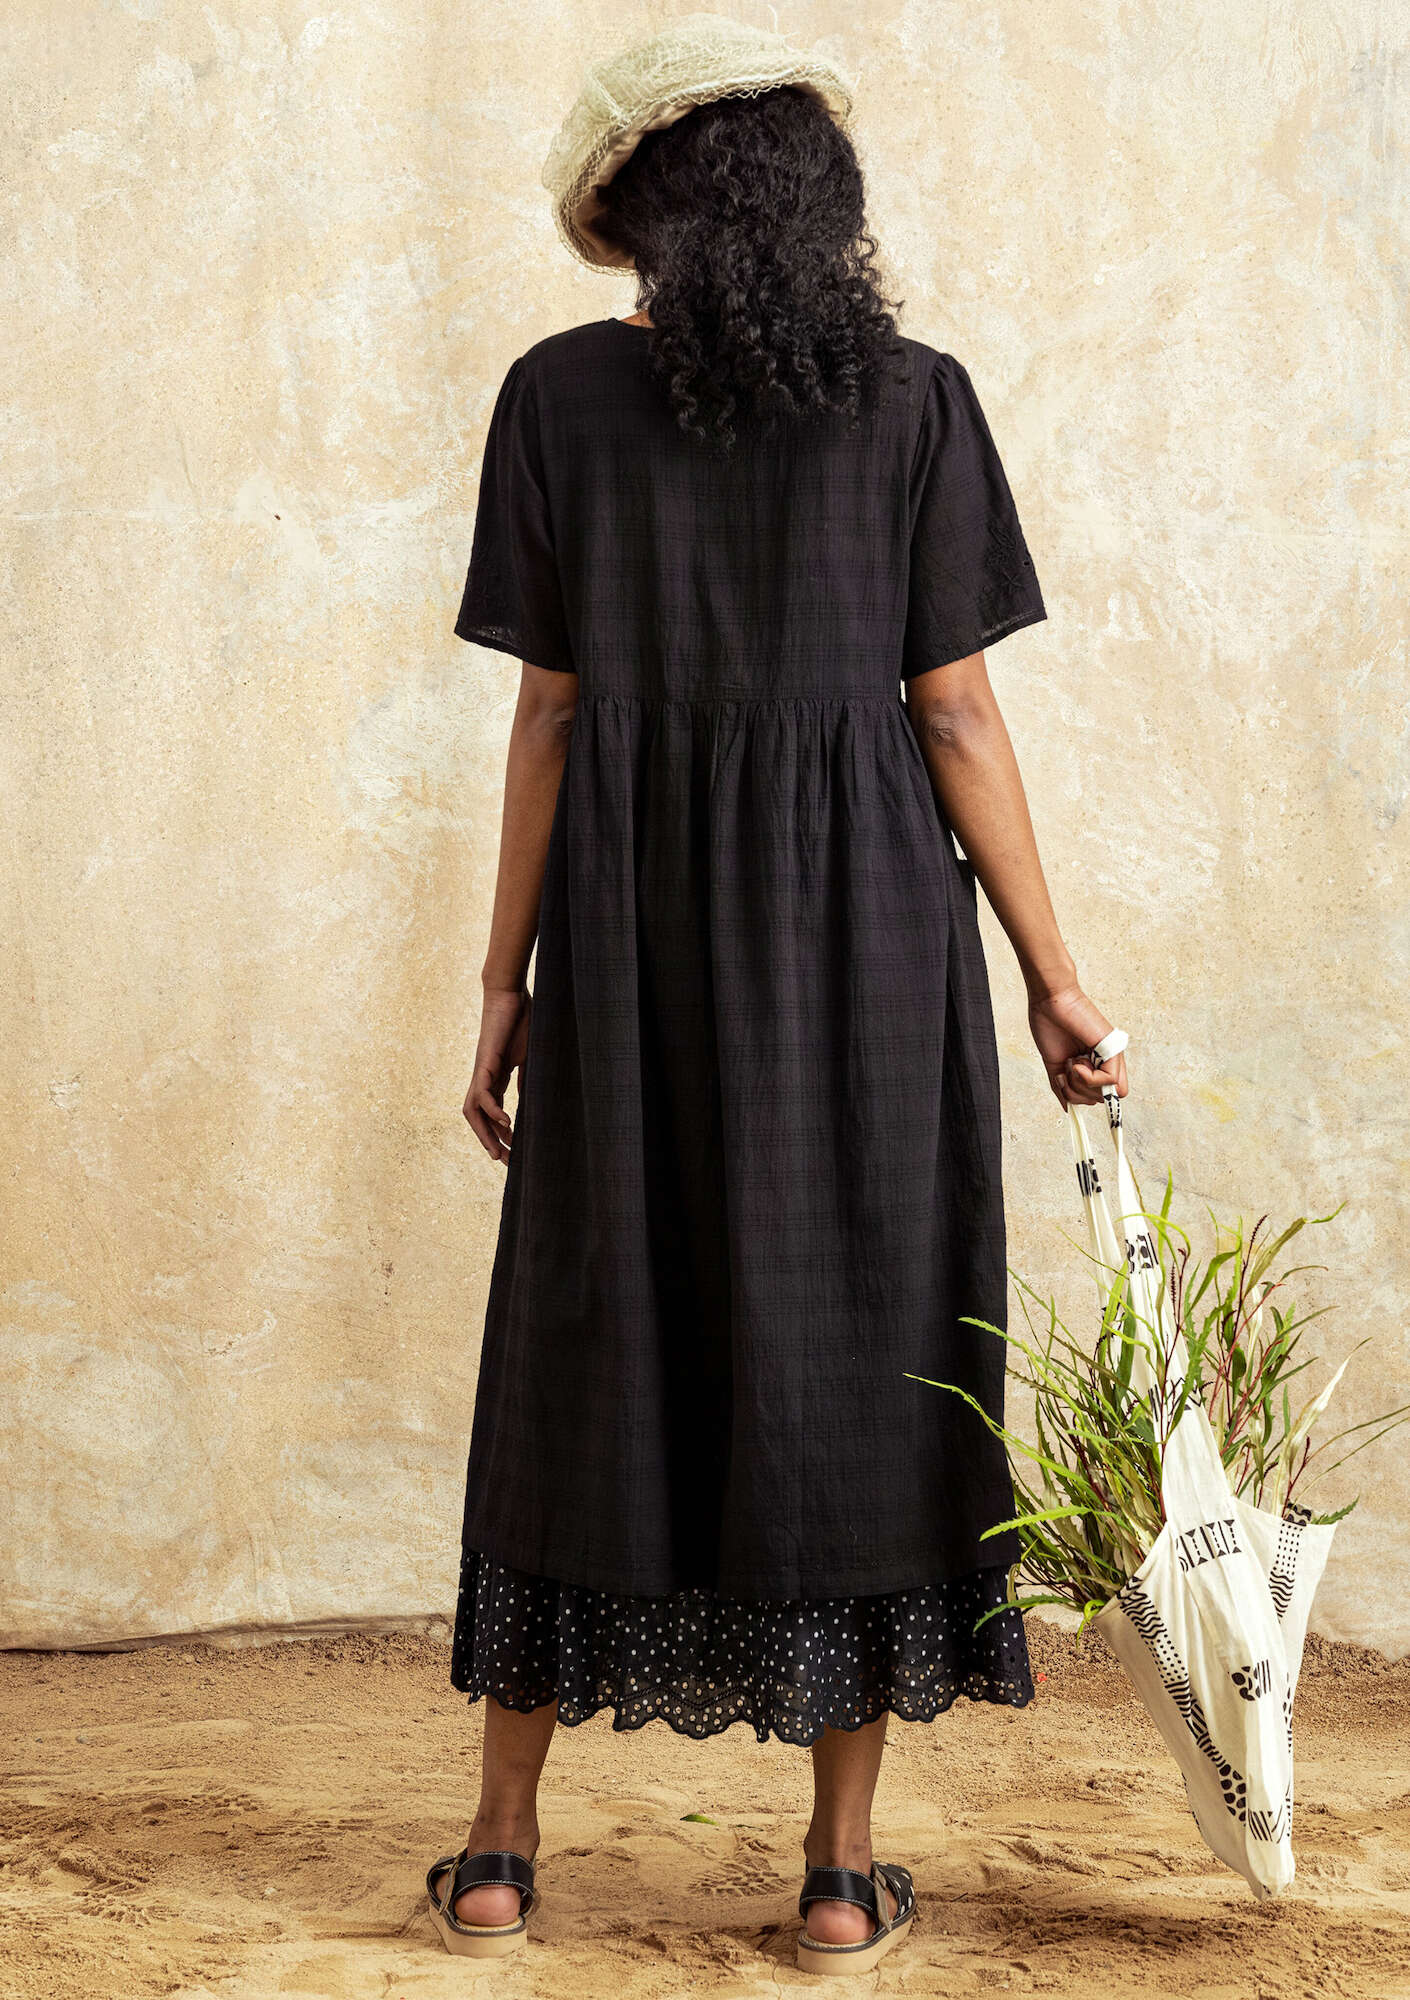 Woven “Tania” dress in organic cotton black